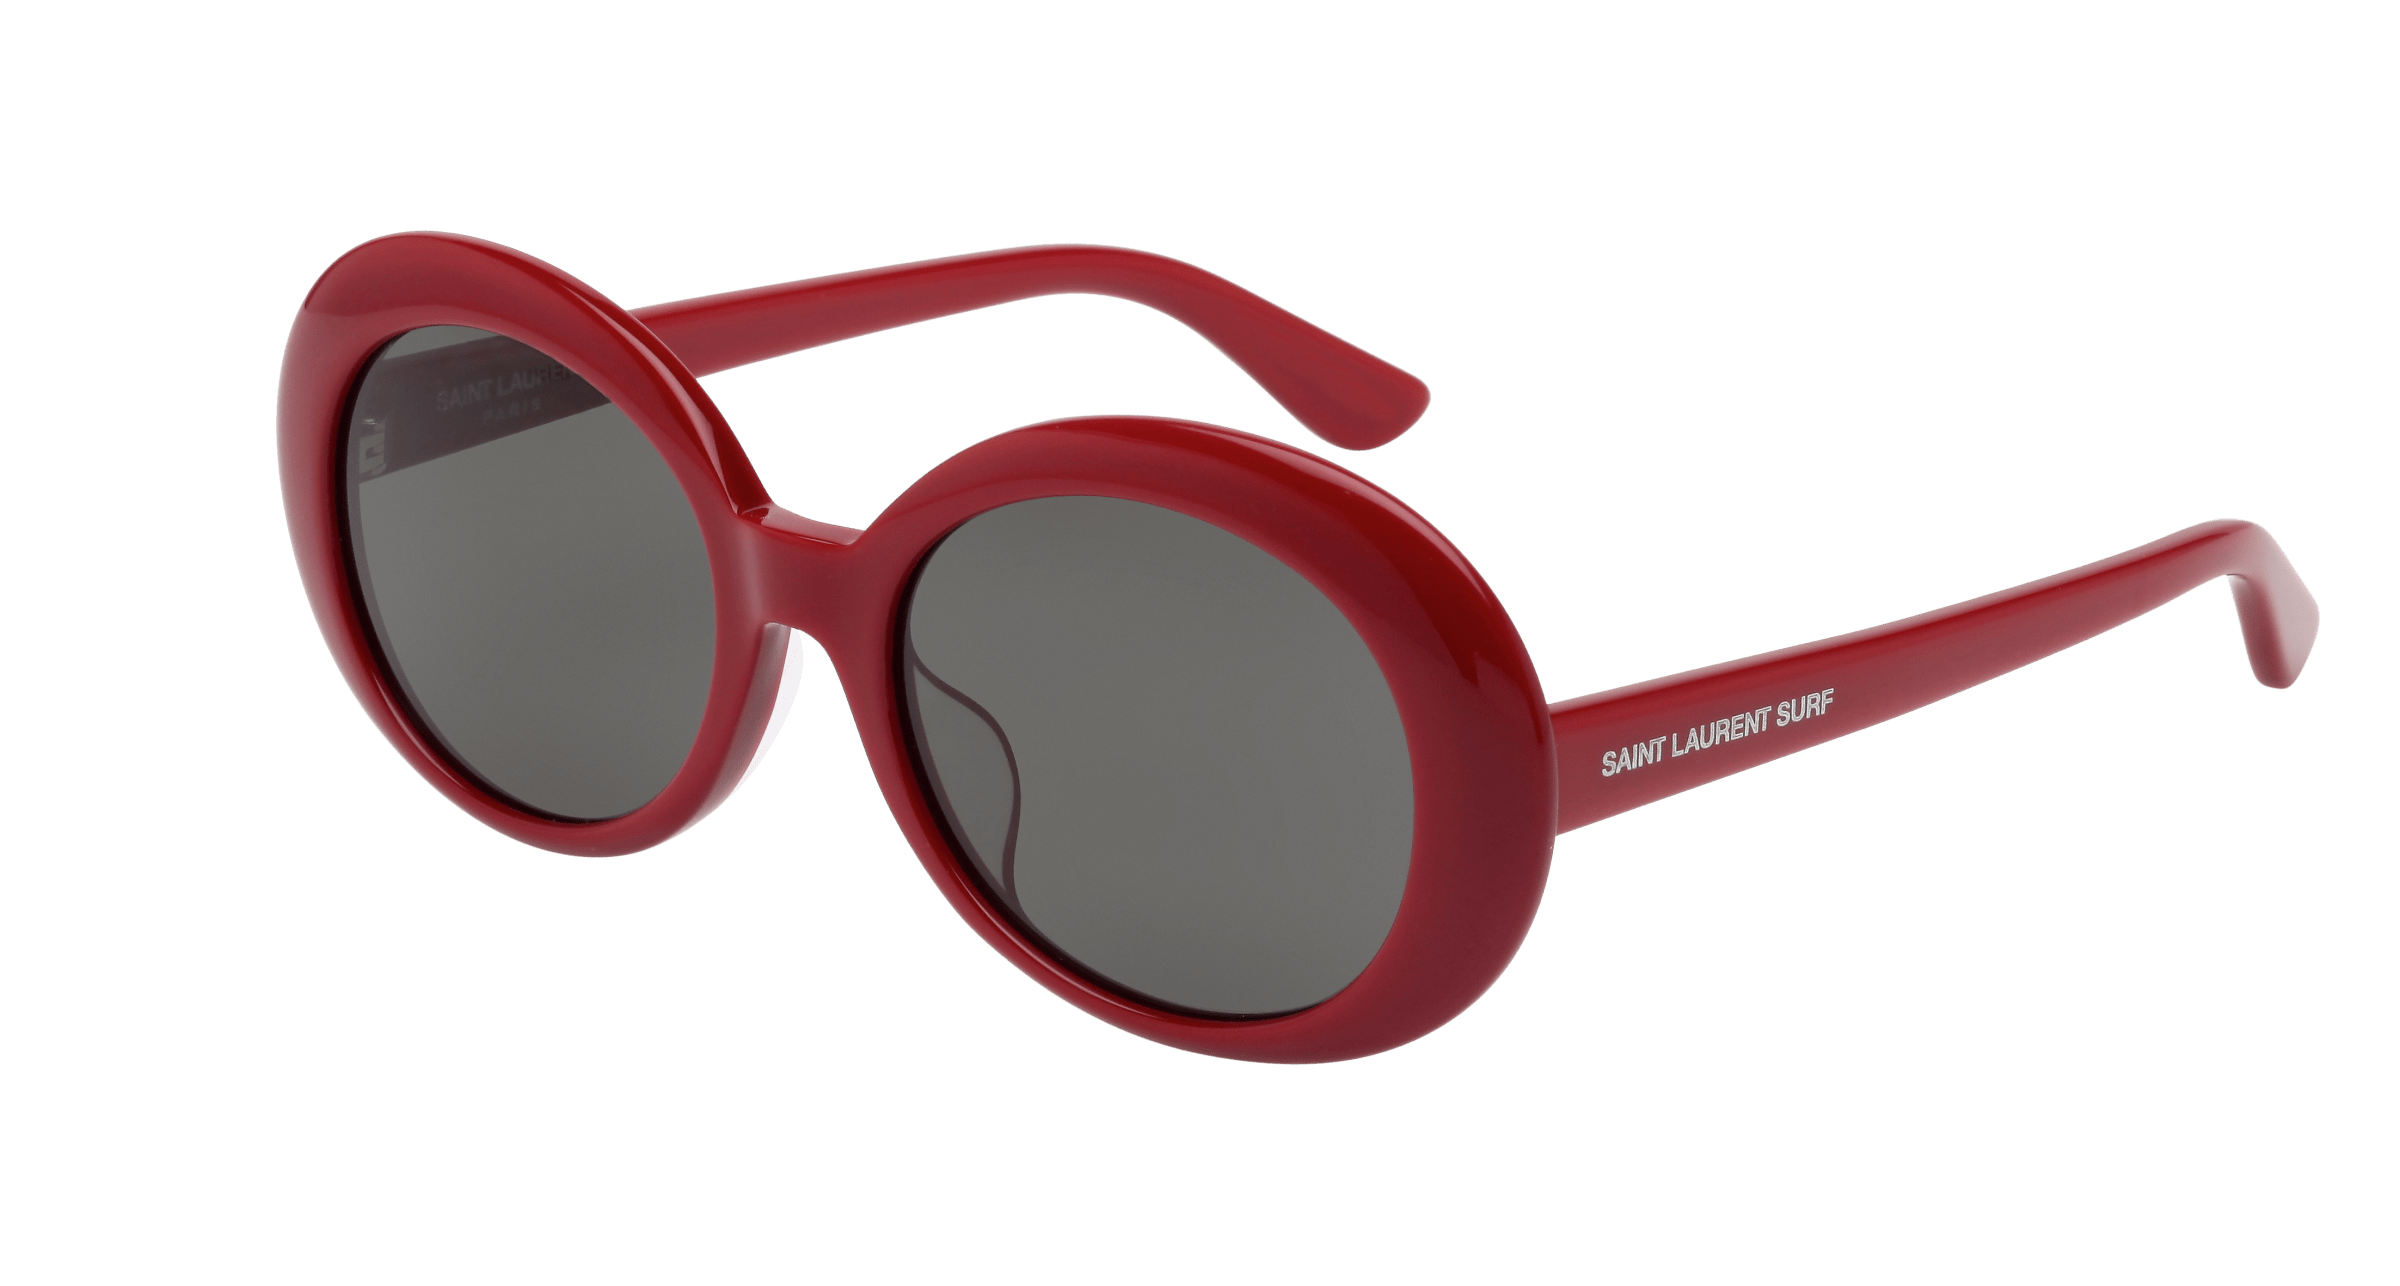 SAINT LAURENT California Oval Sunglasses | Sunglasses women designer, Oval  sunglasses, Unisex glasses